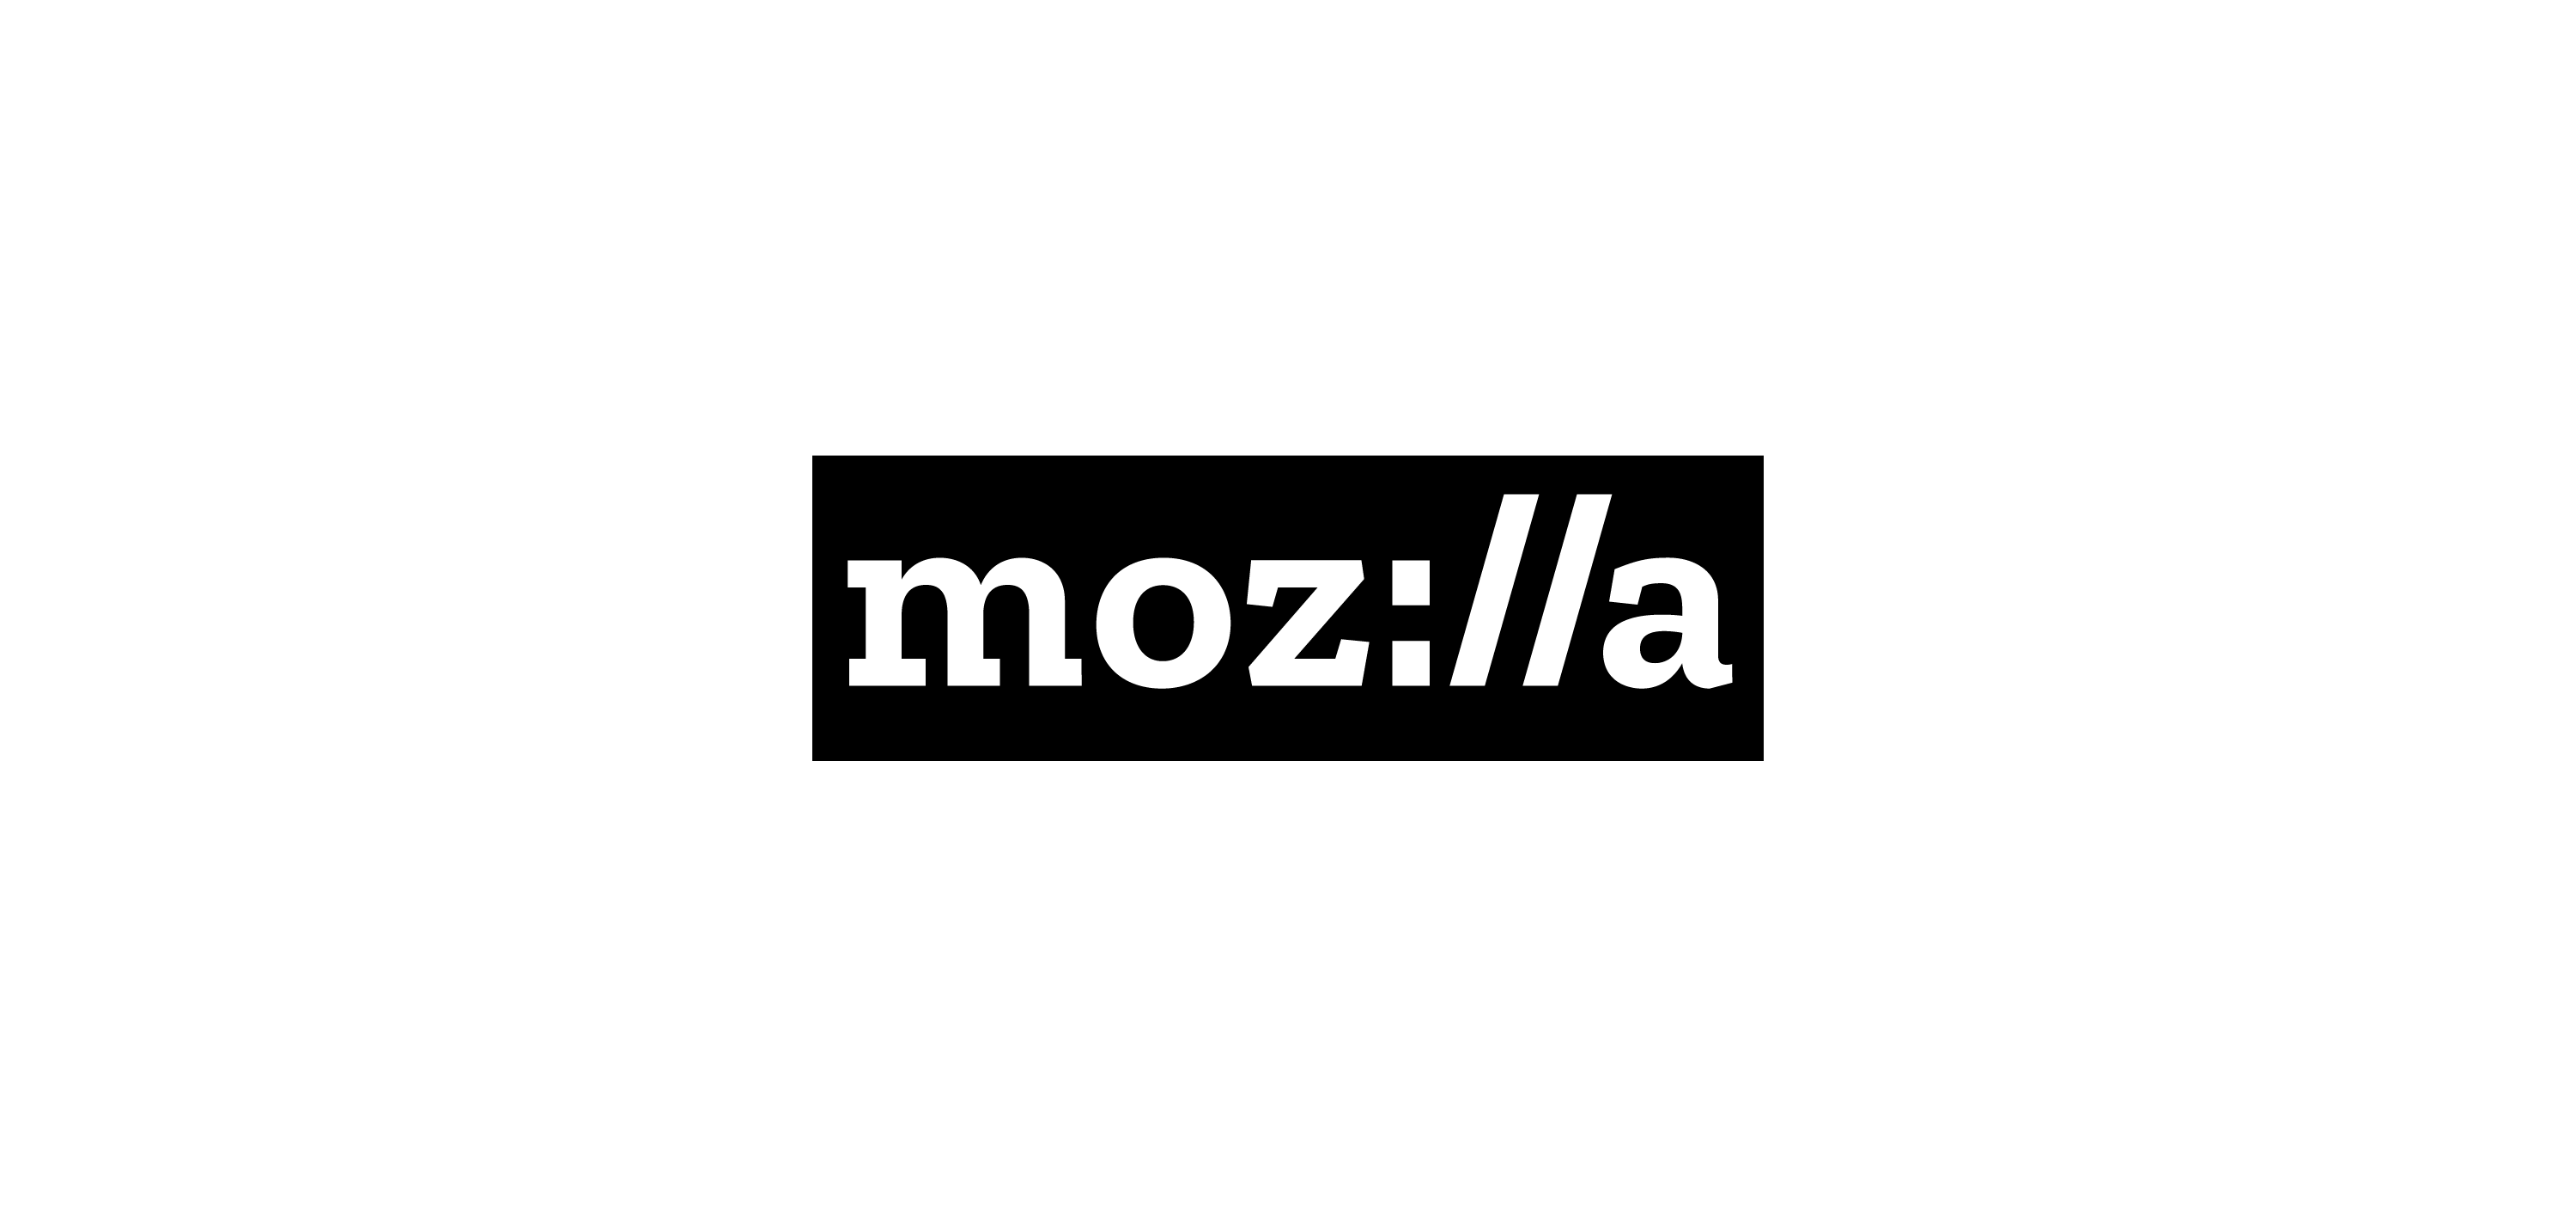 Mozilla 2017 logo-01